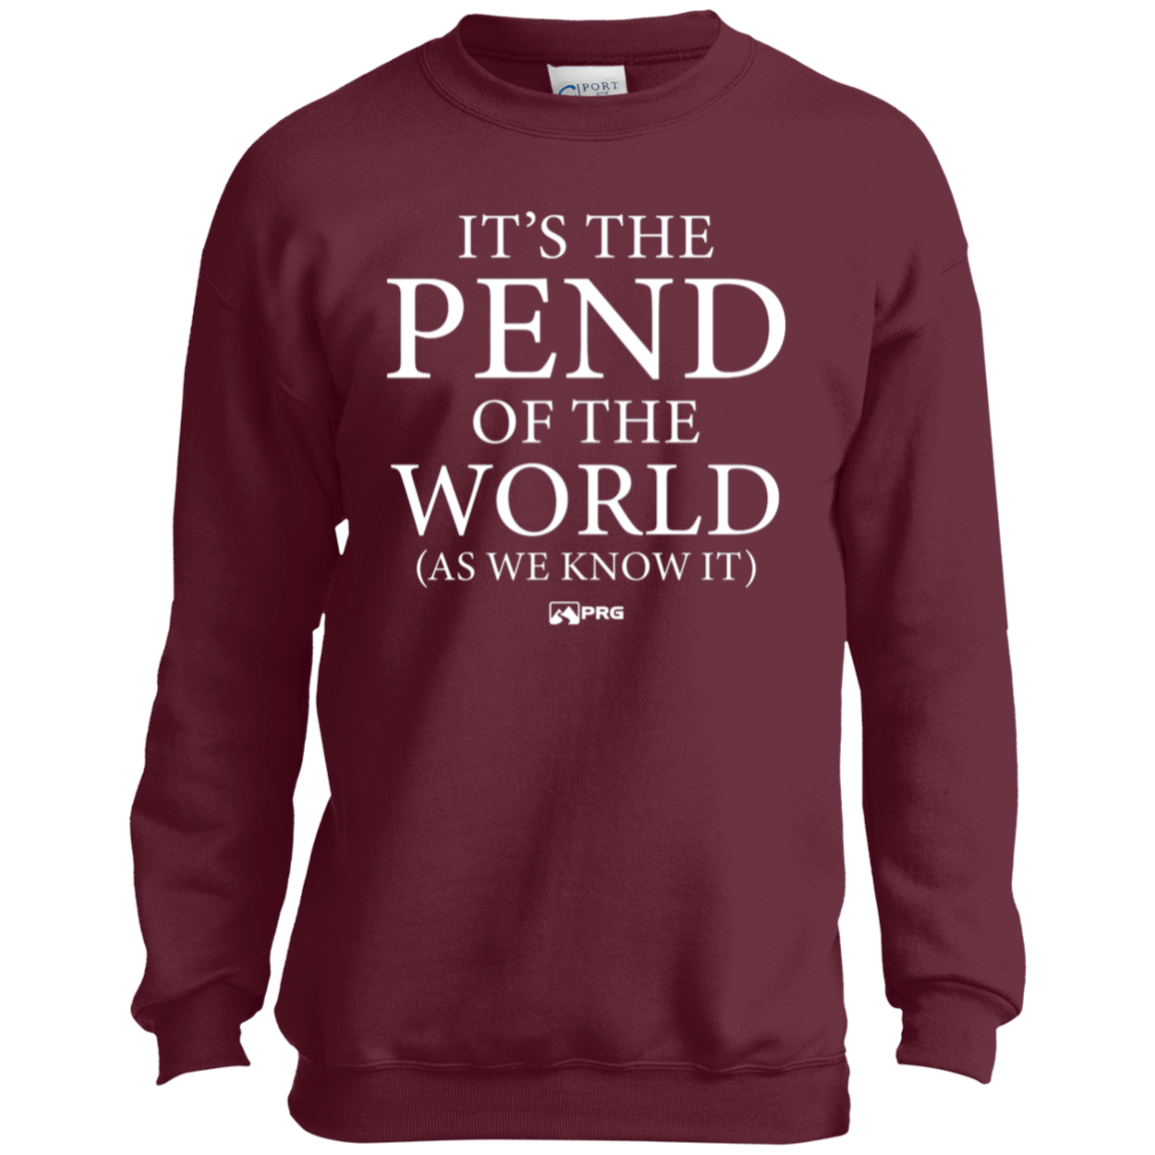 Pend of the World - Youth Sweatshirt